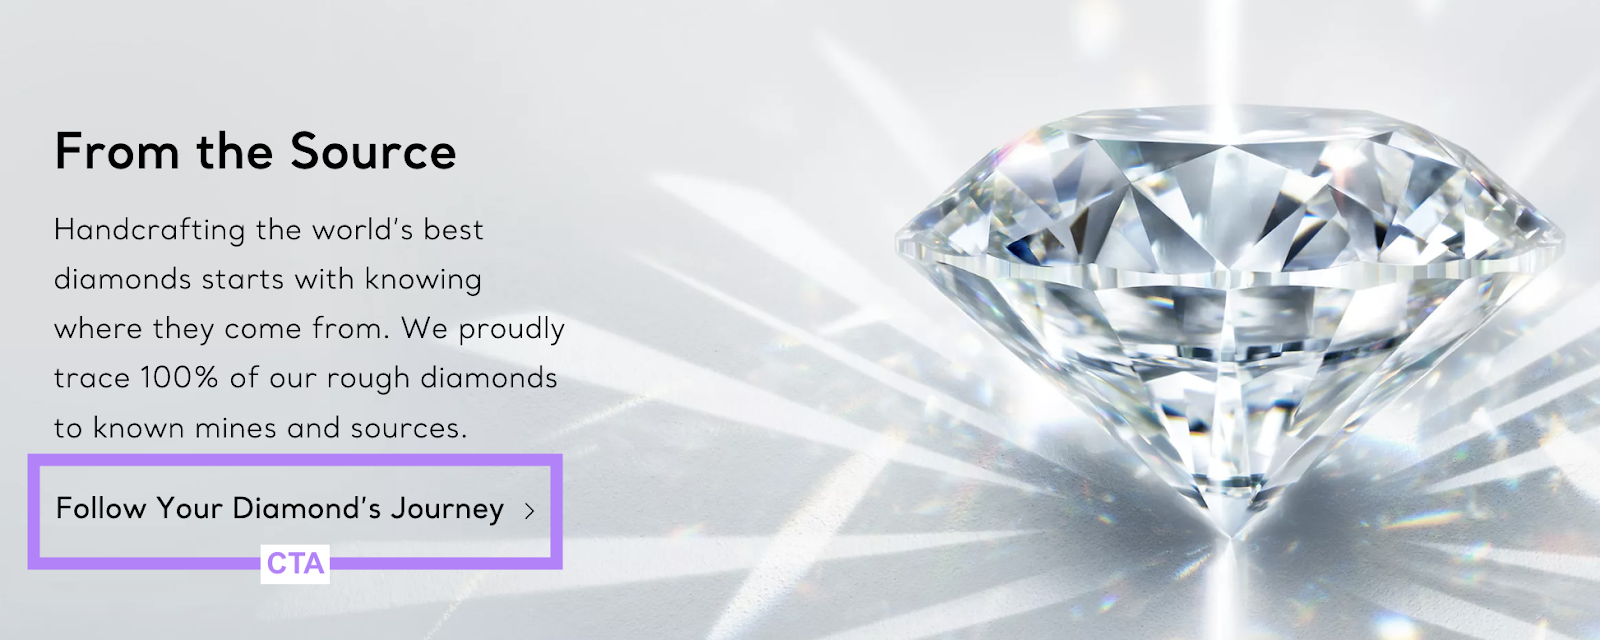 "Follow Your Diamond's Journey" CTA highlighted on Tiffany & Co's website